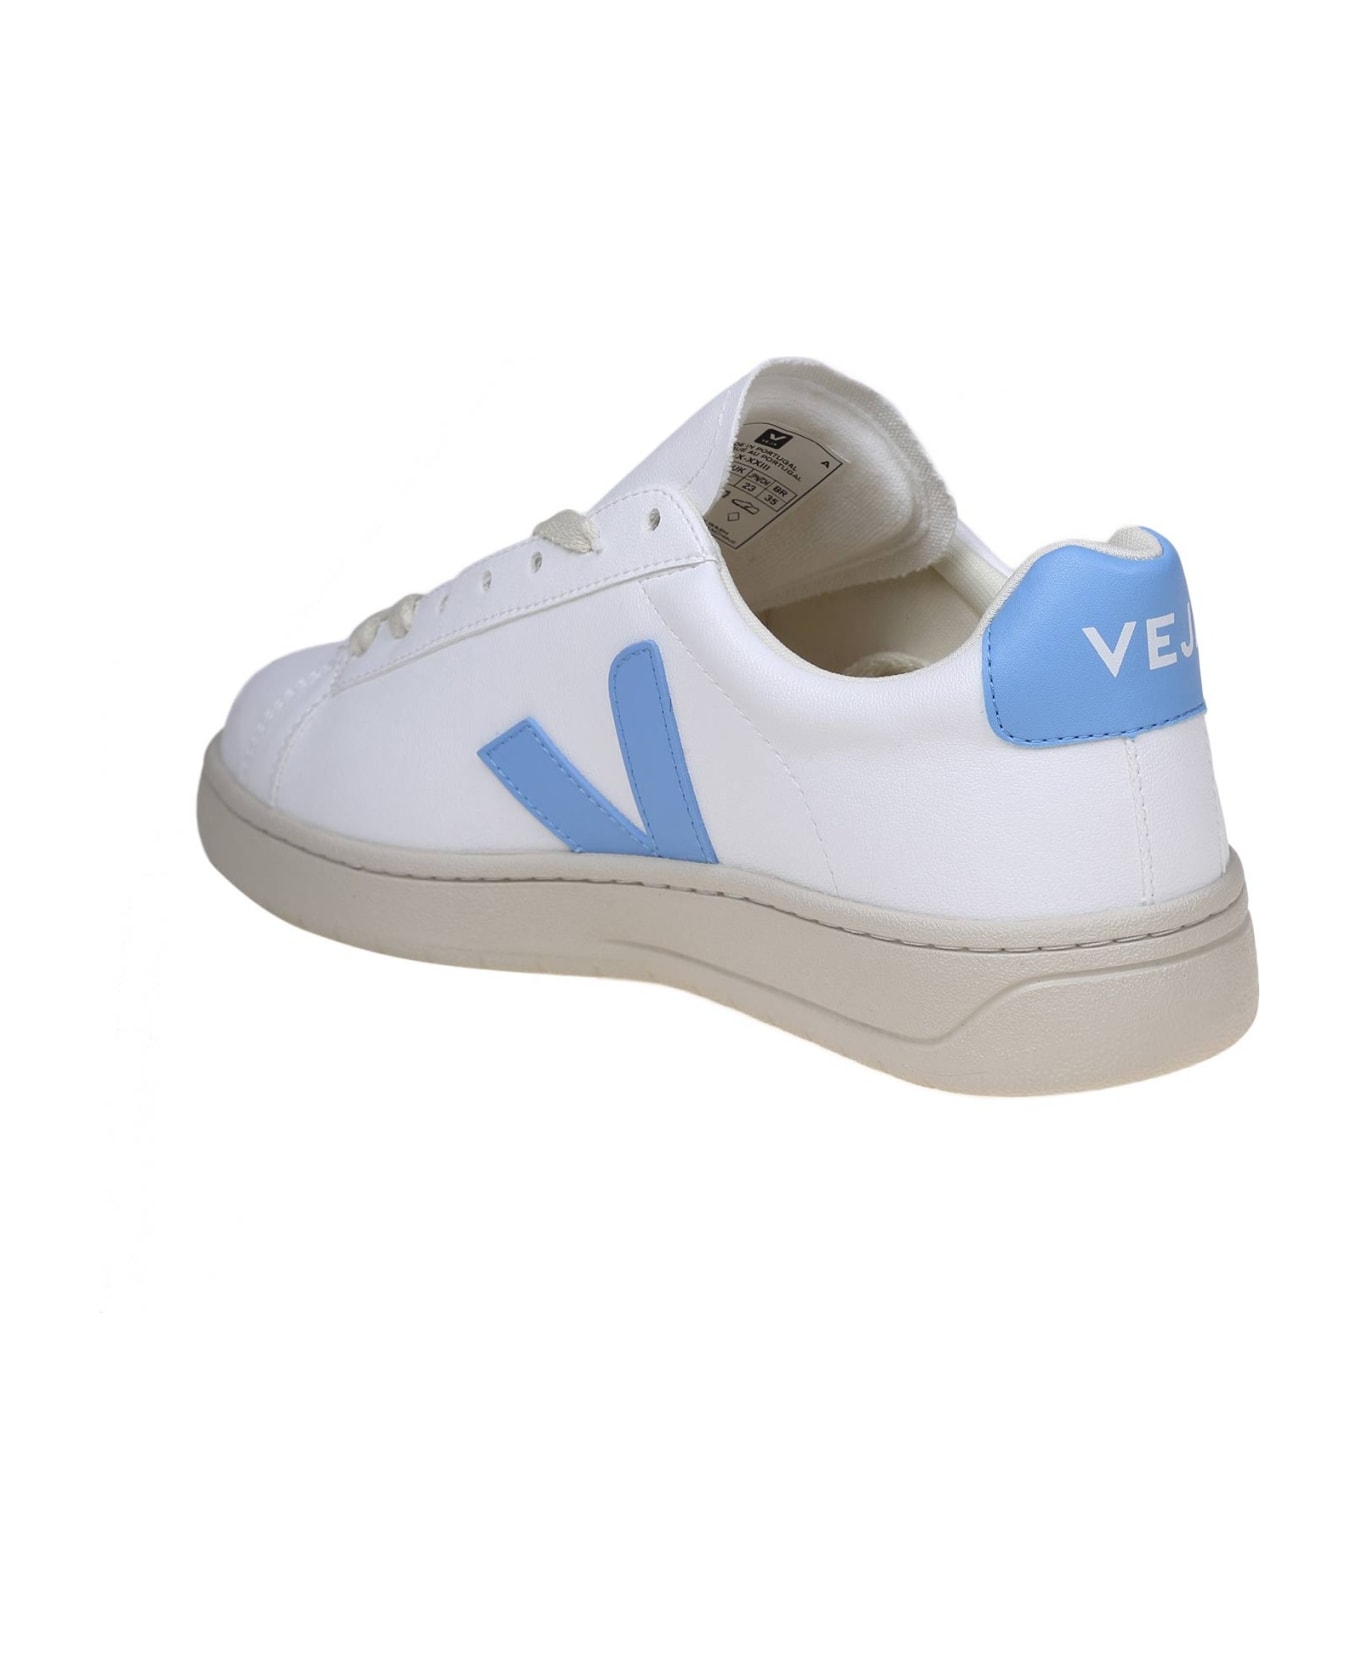 Veja Urca Sneakers In White/light Blue Coated Cotton - WHITE/LIGHT BLUE